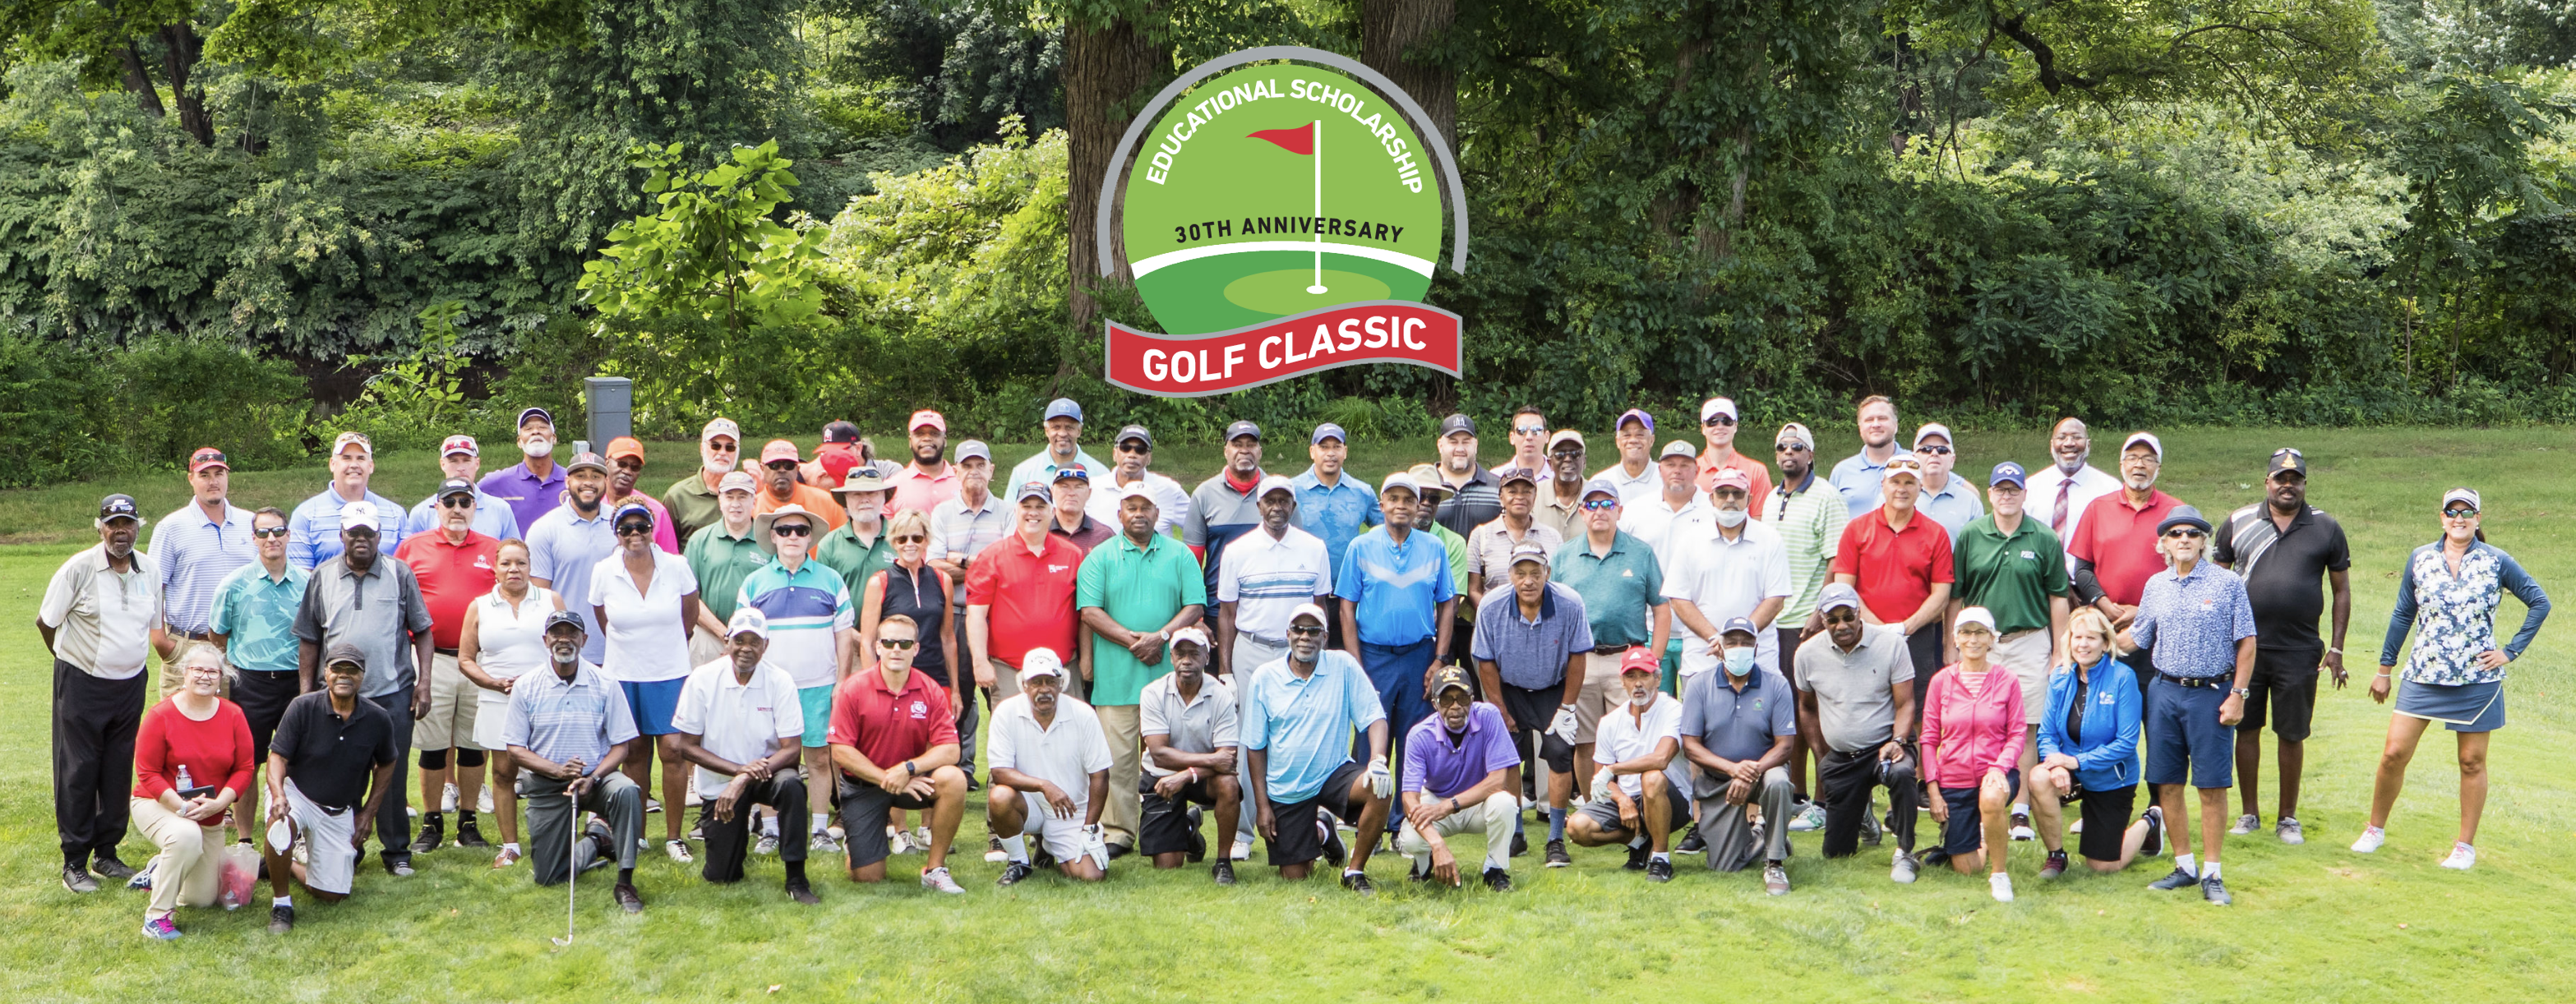 Annual Educational Scholarship Golf Classic Celebrates 30th Anniversary